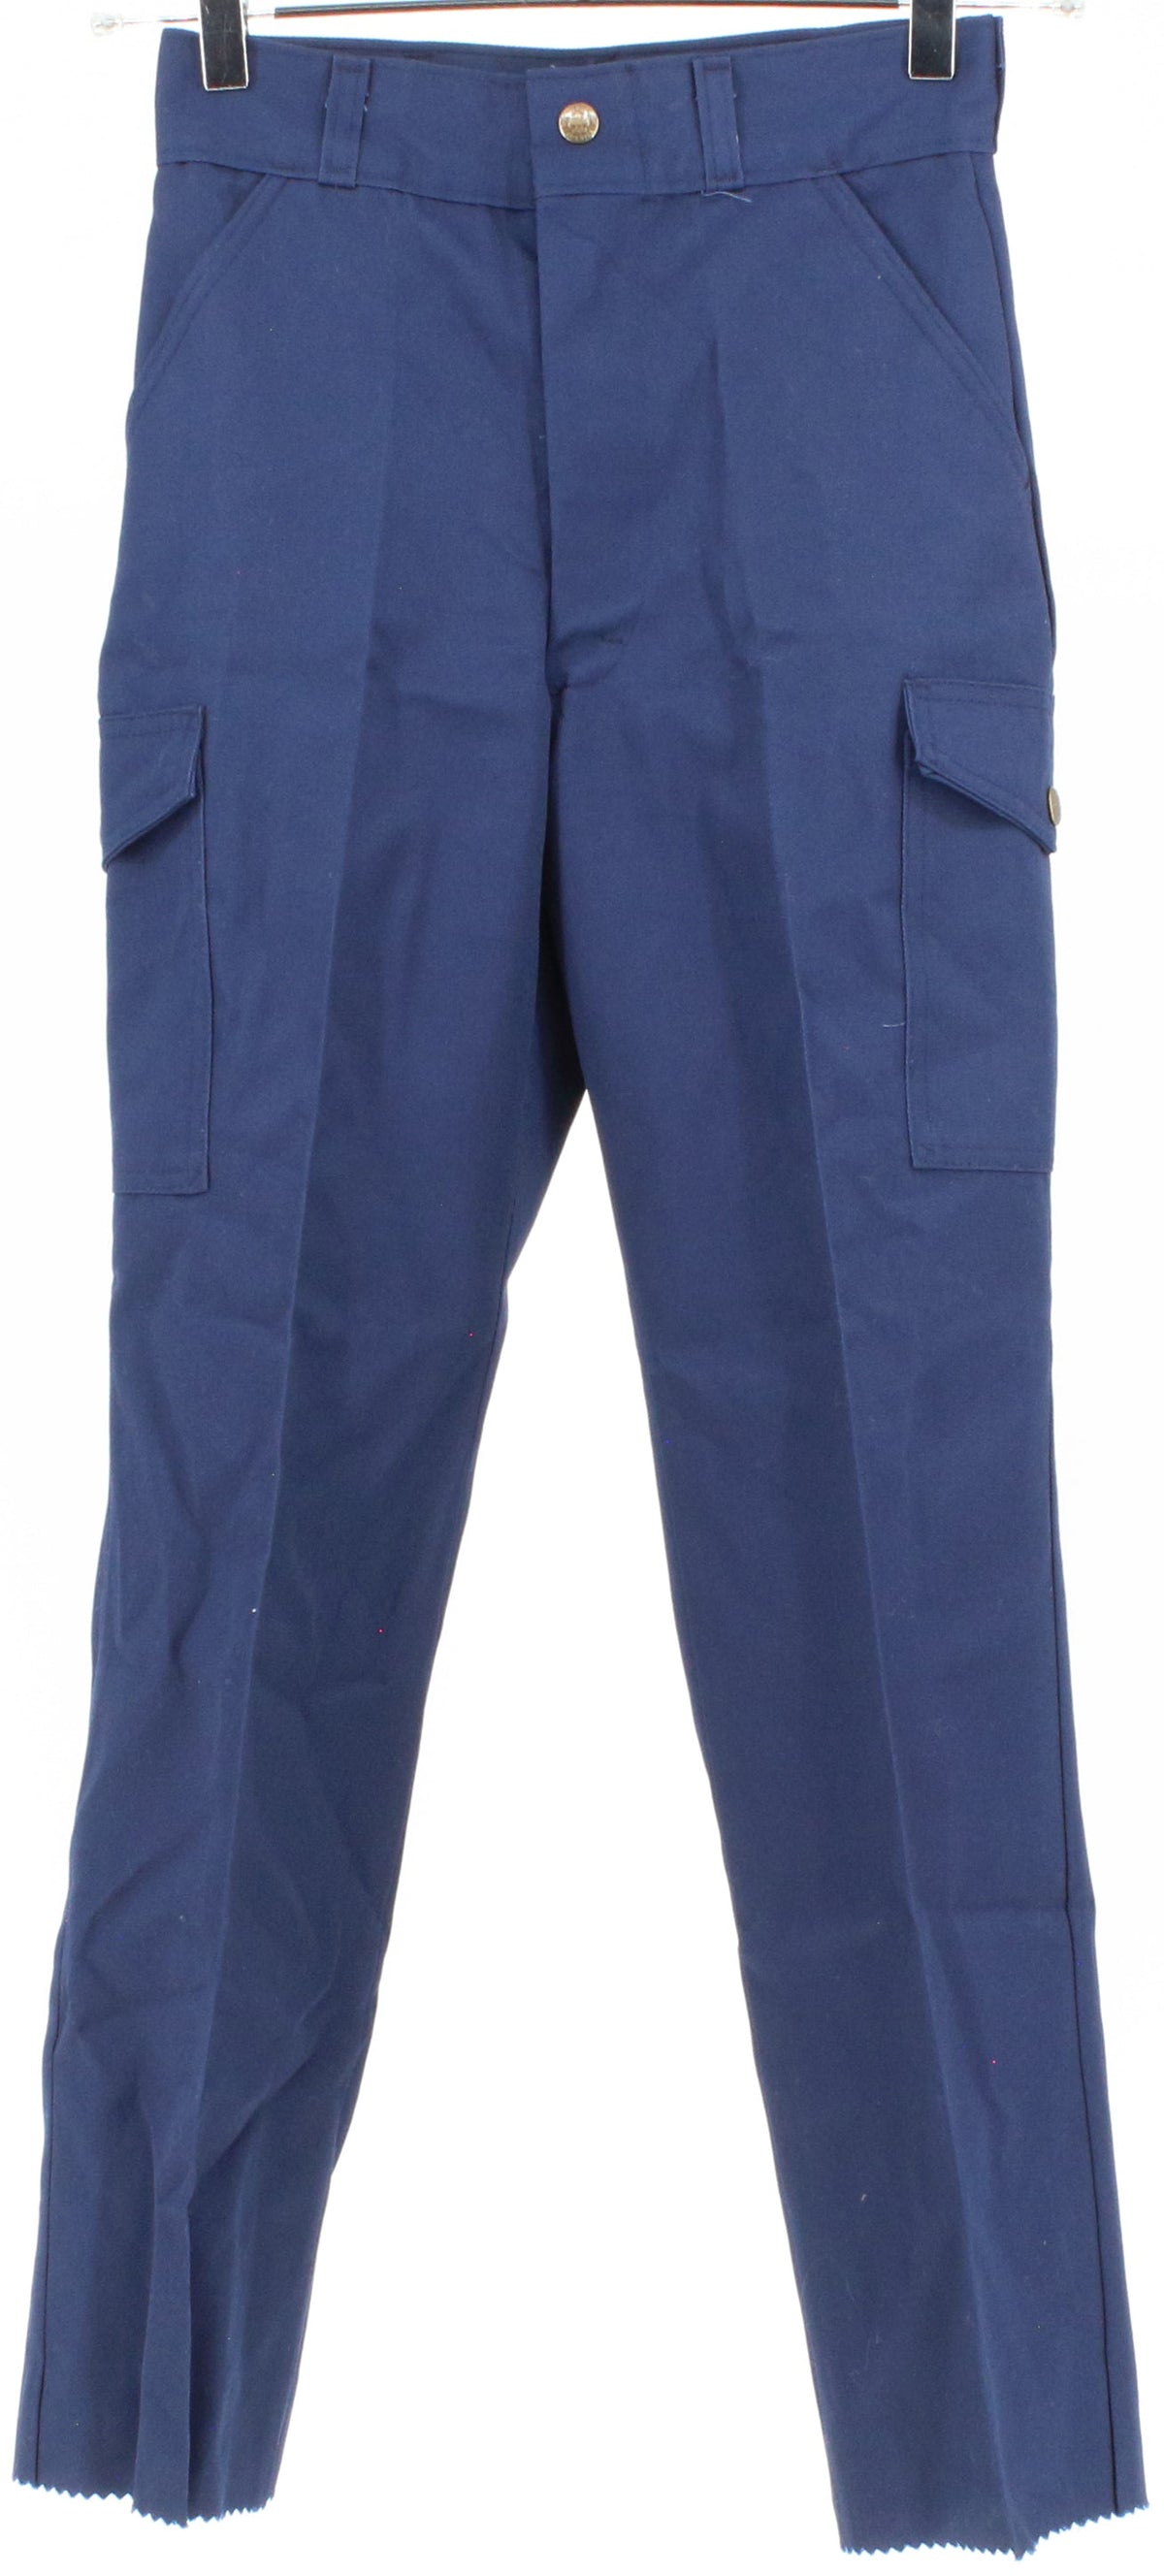 Scouts Of America Official Uniform Navy Blue Boy's Pants